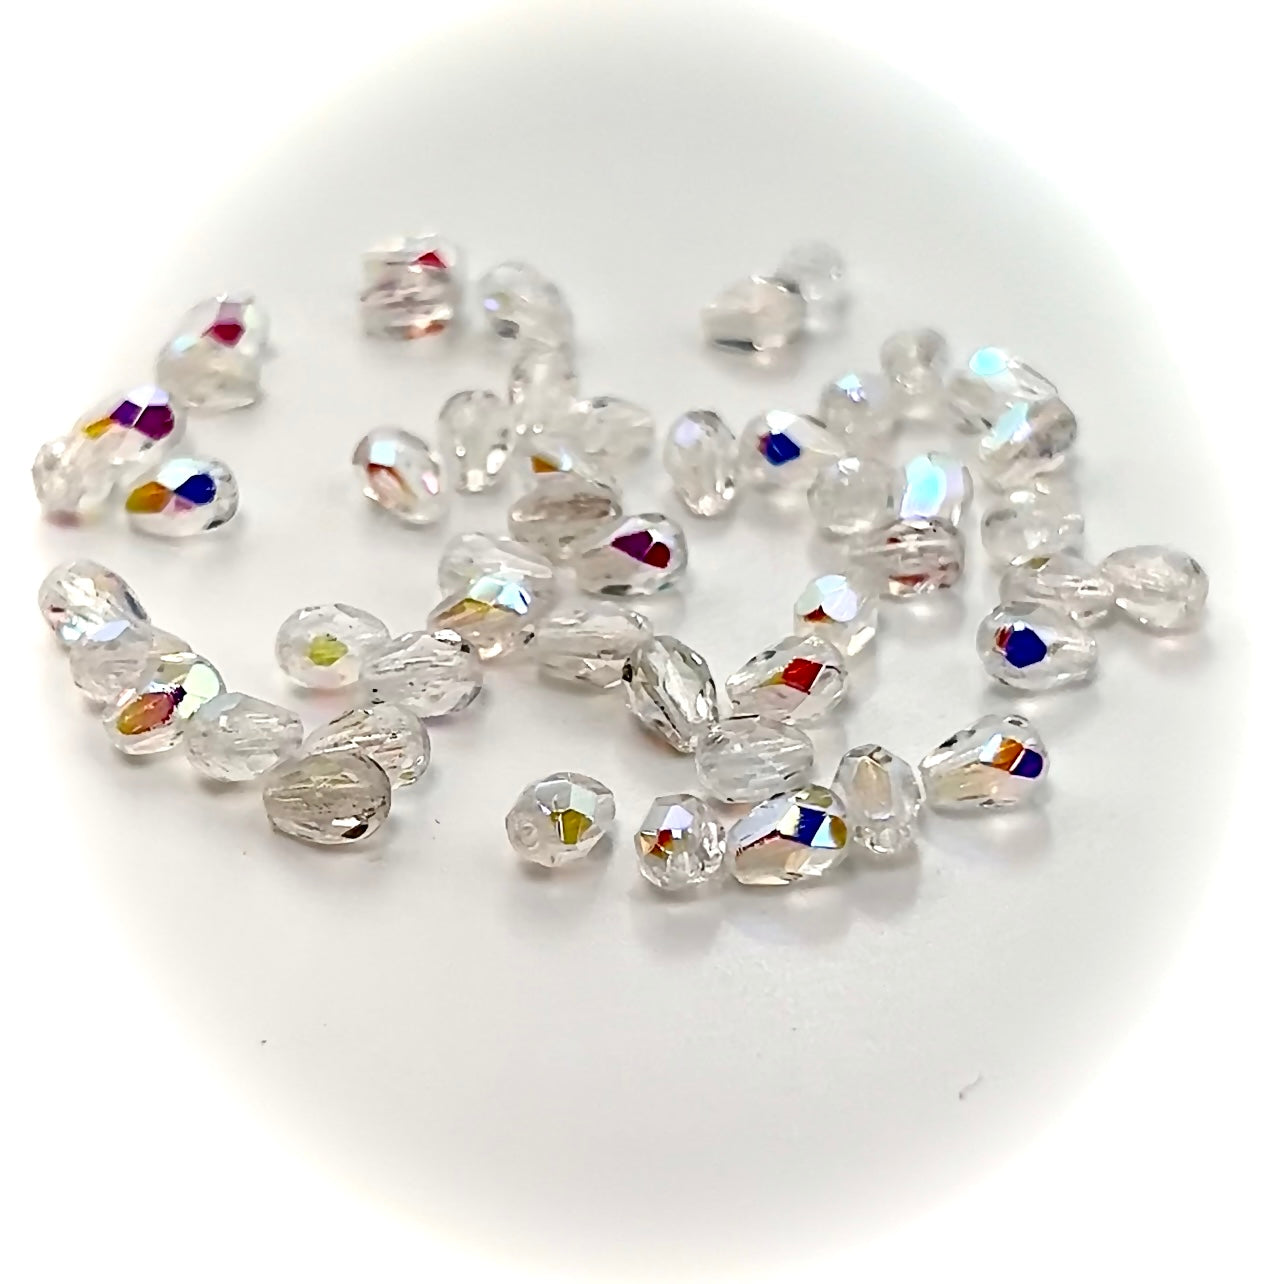 Czech Glass Pear Shaped Fire Polished Beads 8x6mm Crystal AB Tear Drops, 50 pieces, J029